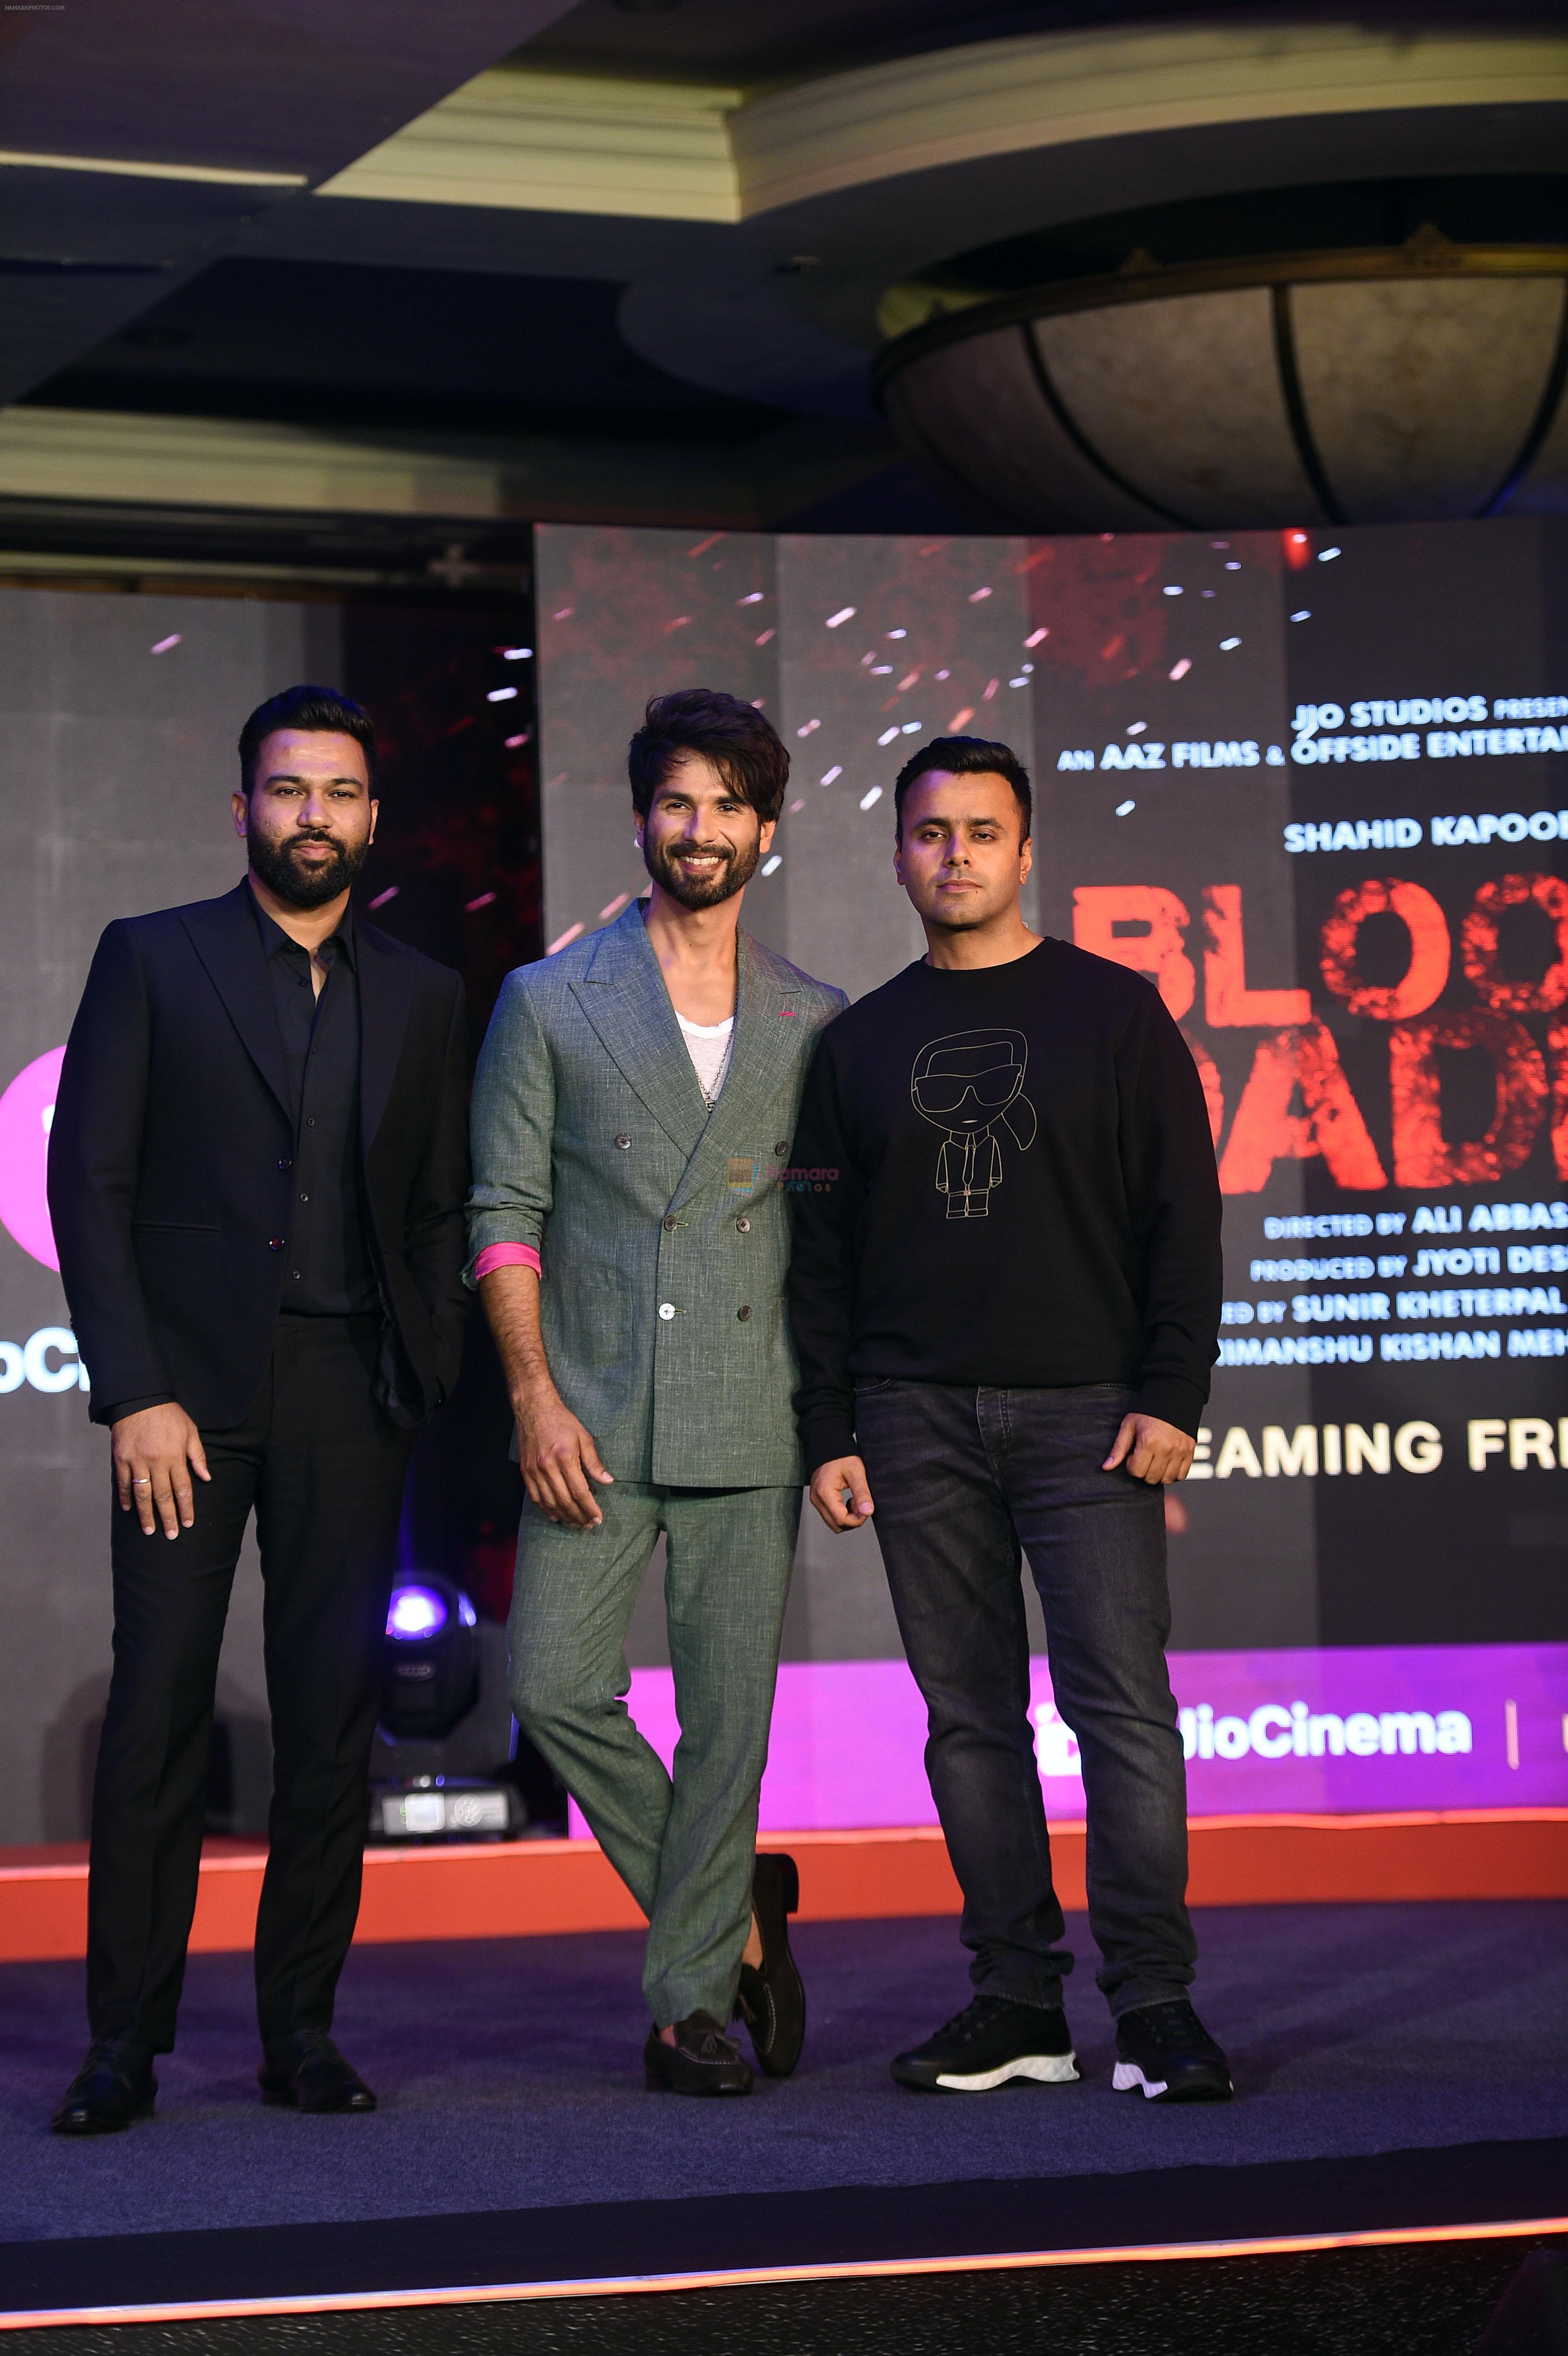 Shahid Kapoor, Ali Abbas Zafar, Himanshu Kishan Mehra at the trailer launch of Bloody Daddy on 24 May 2023